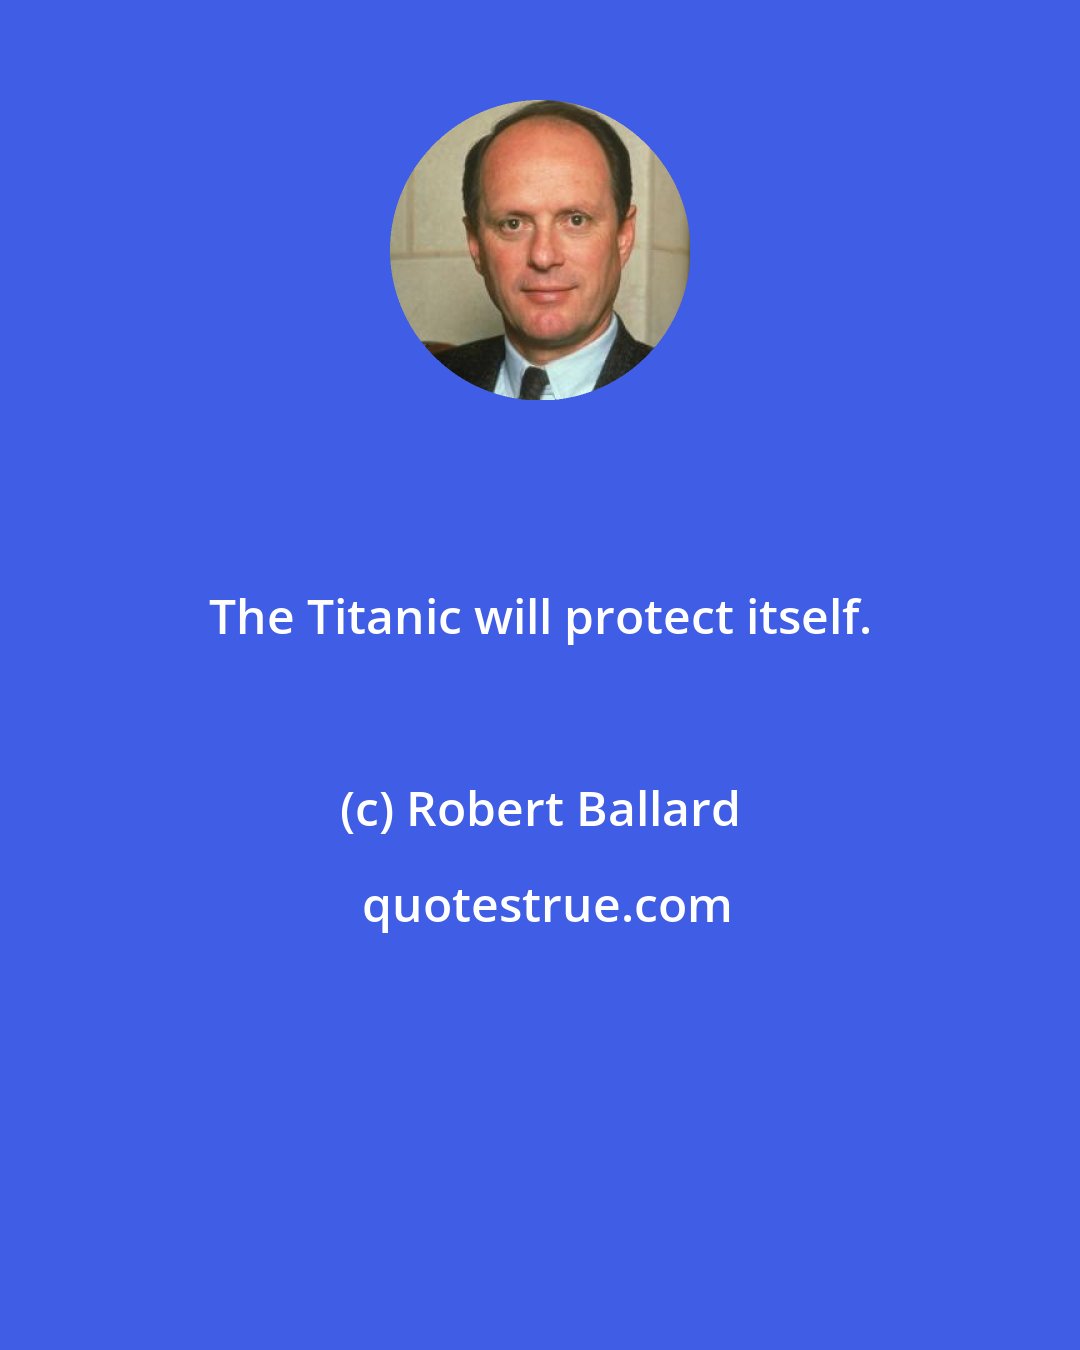 Robert Ballard: The Titanic will protect itself.